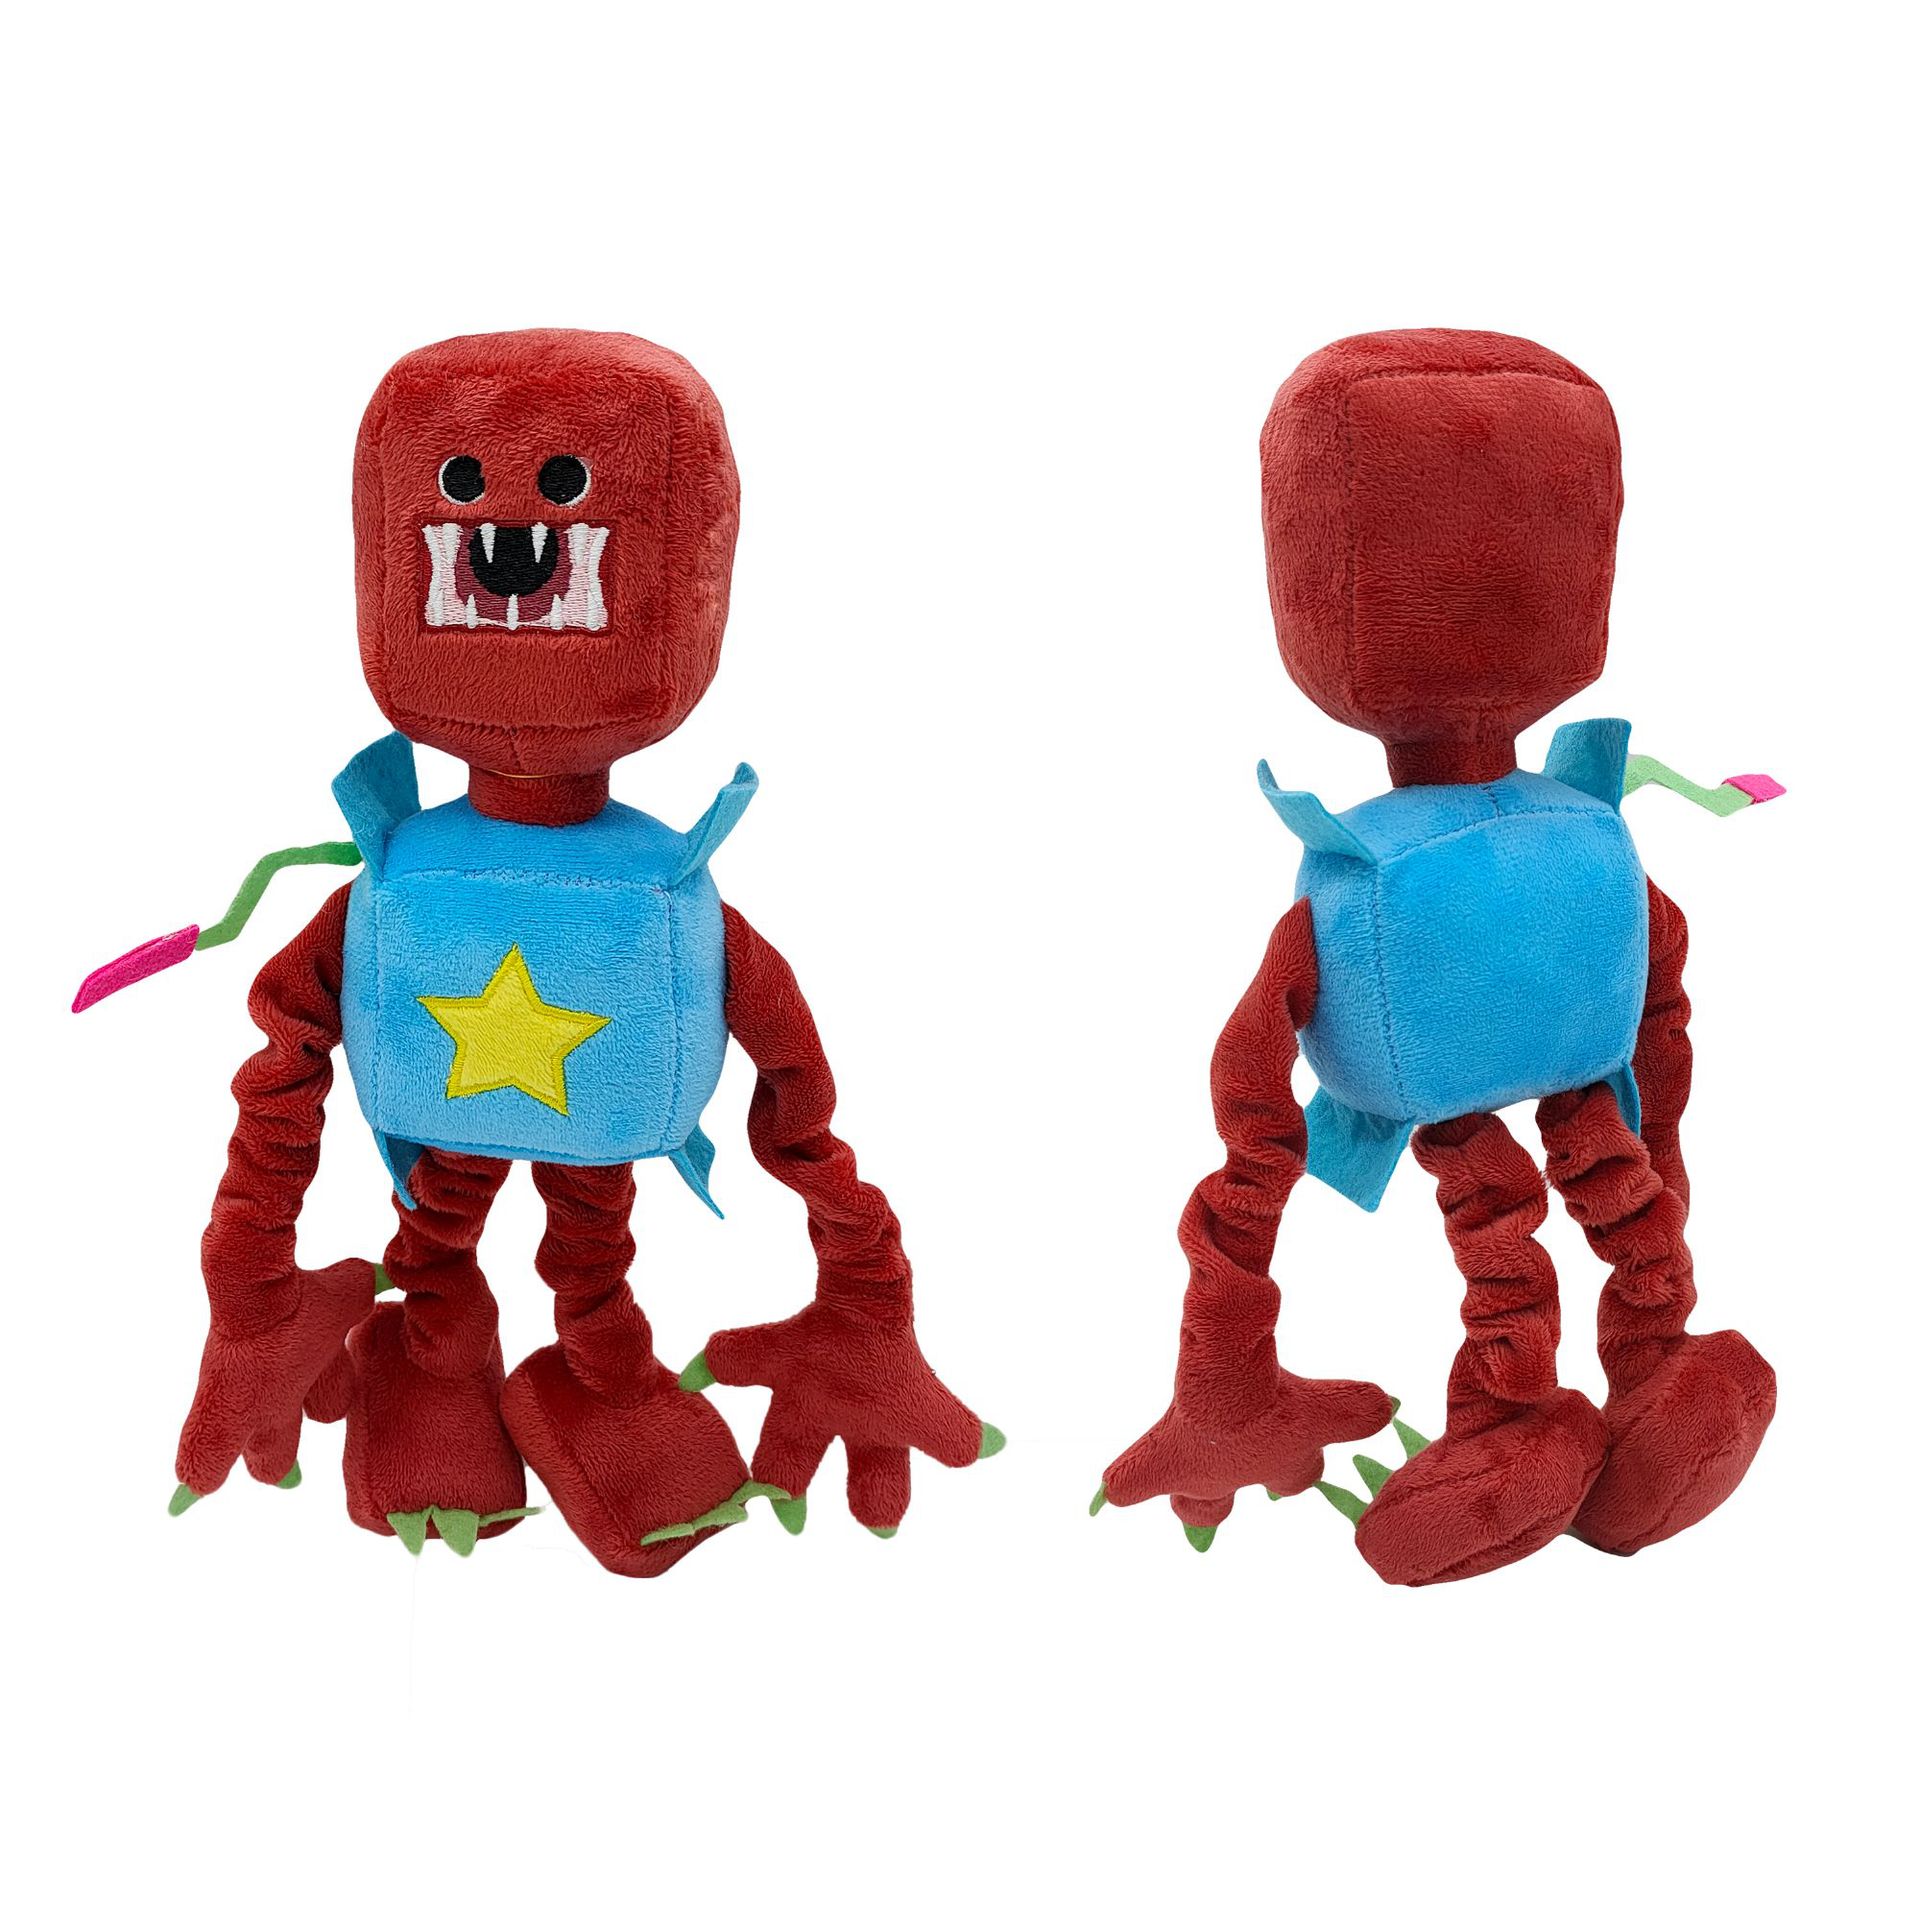 New Project Playtime Boxy Boo Plush Bobbi Plush Toy New Game Series